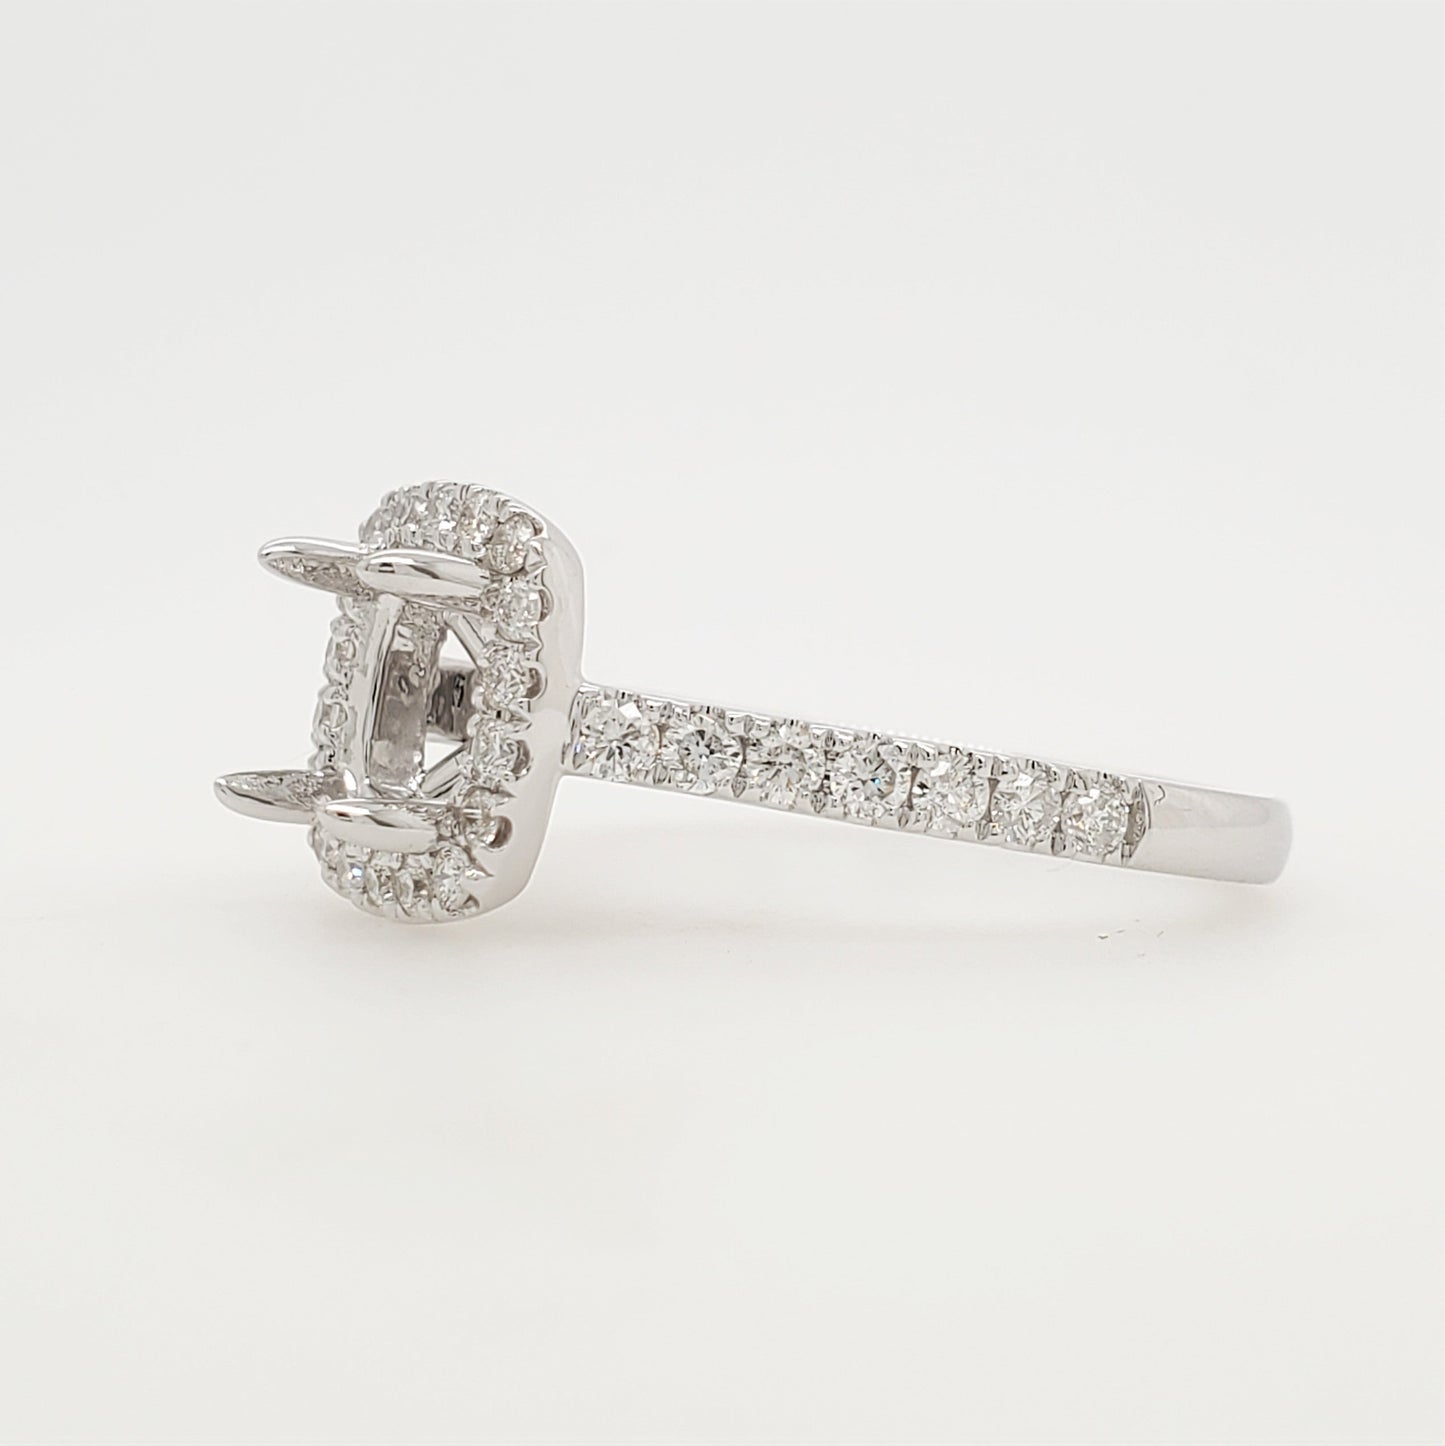 17536R Ring With Diamond